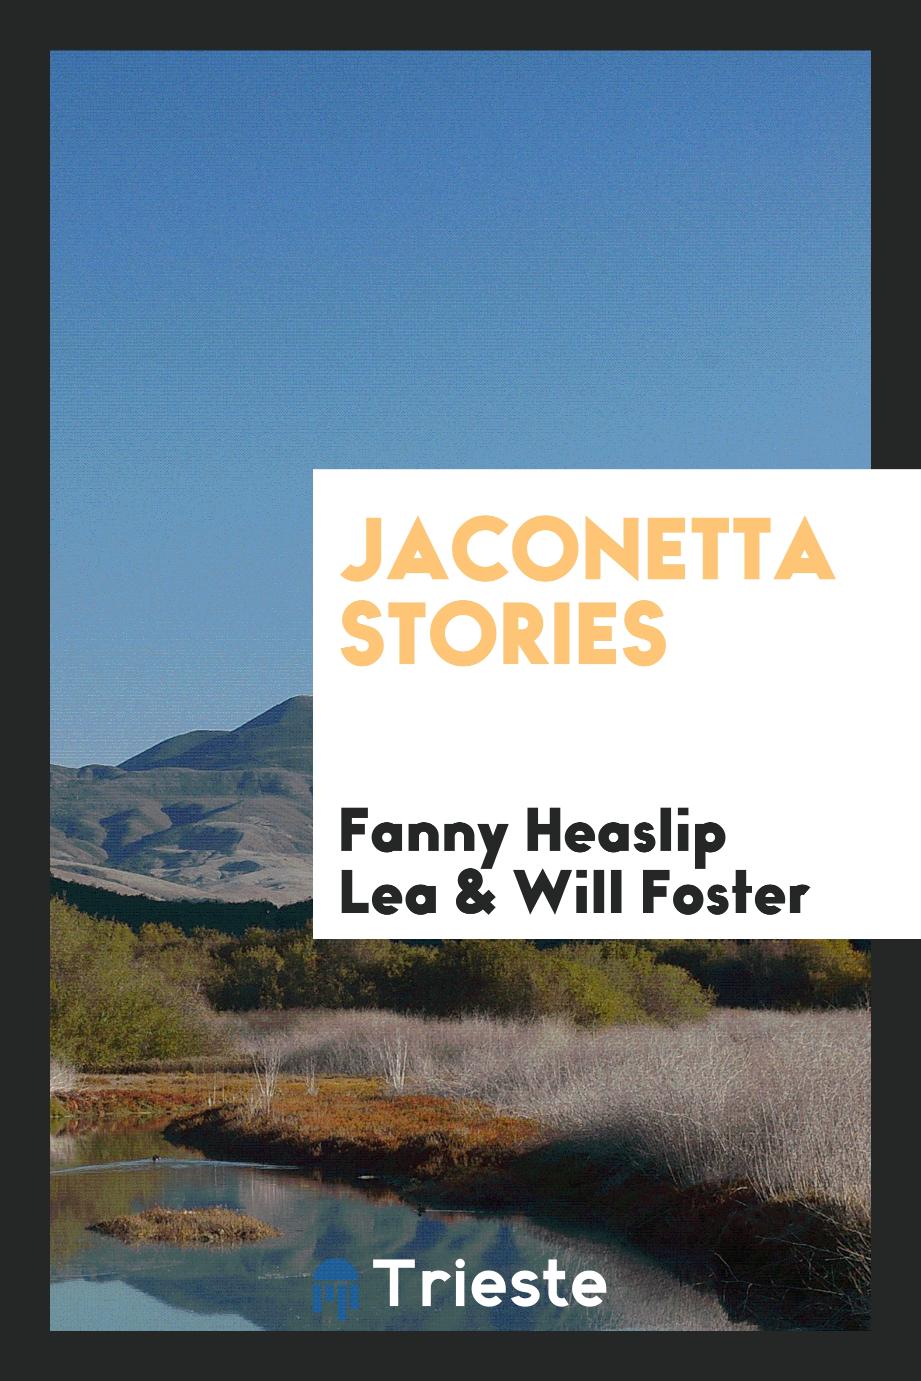 Jaconetta Stories